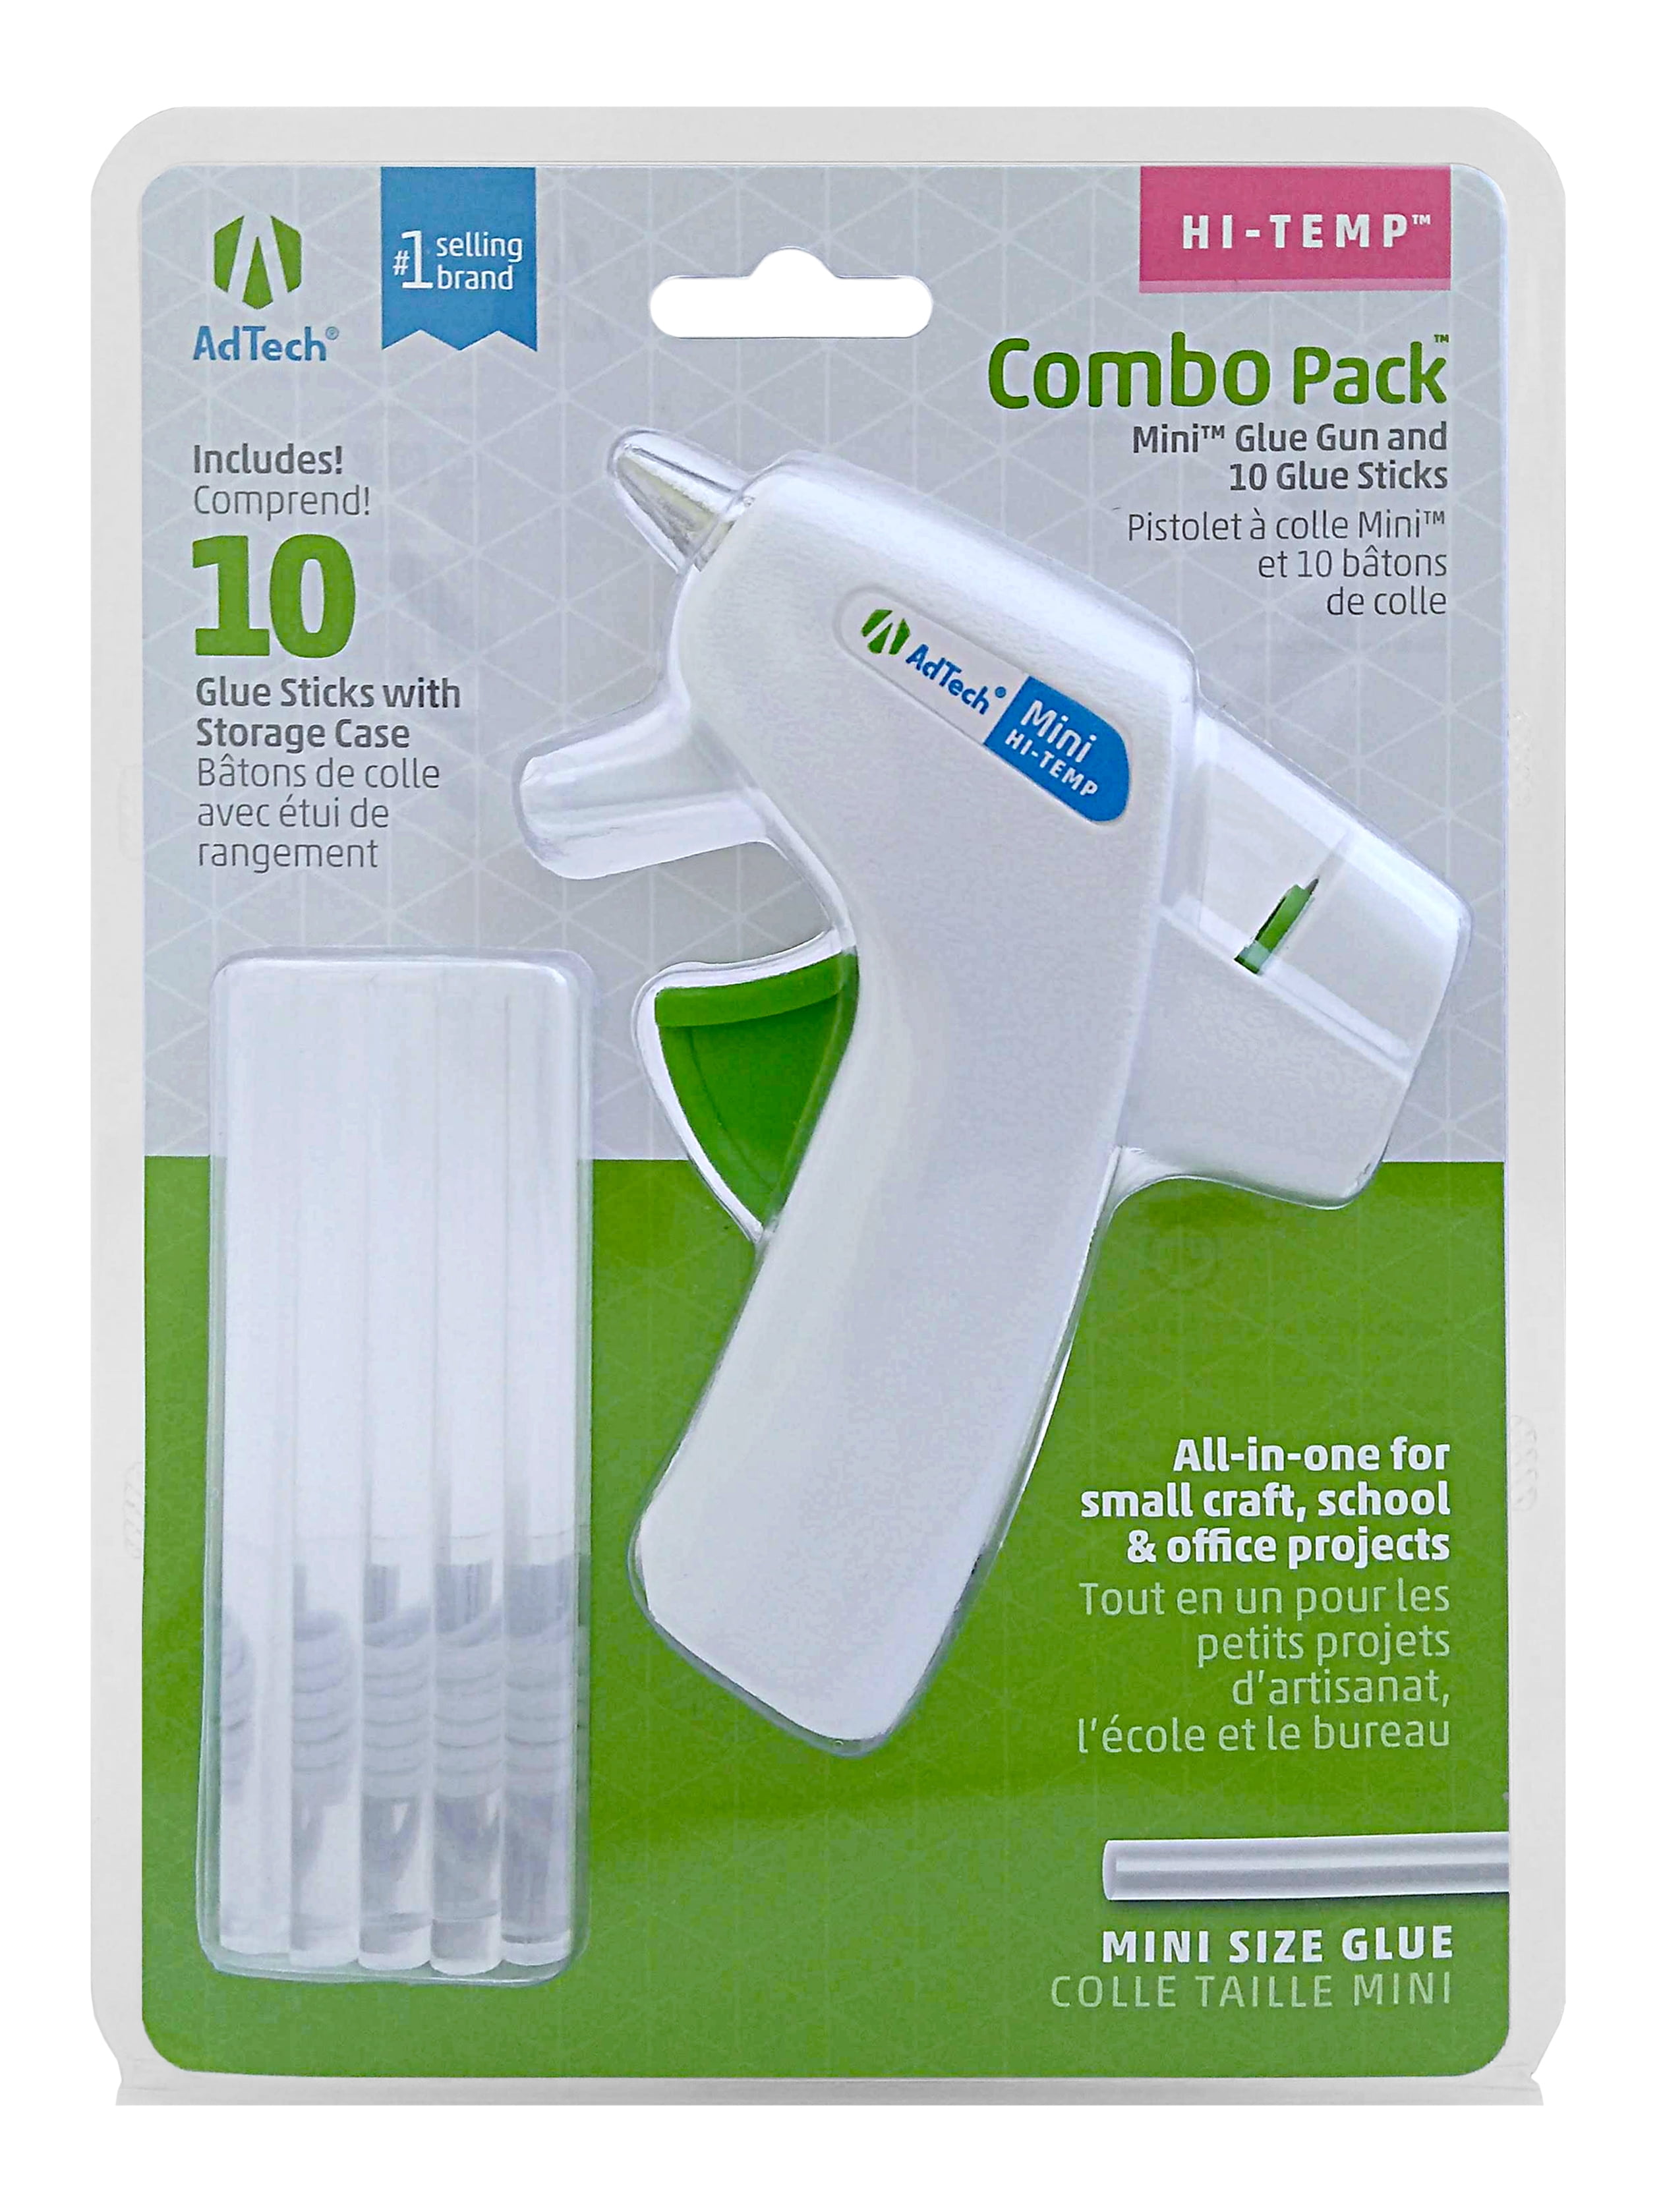 AdTech High Temp Combo Kit Mini Hot Glue Gun with Sticks, White New